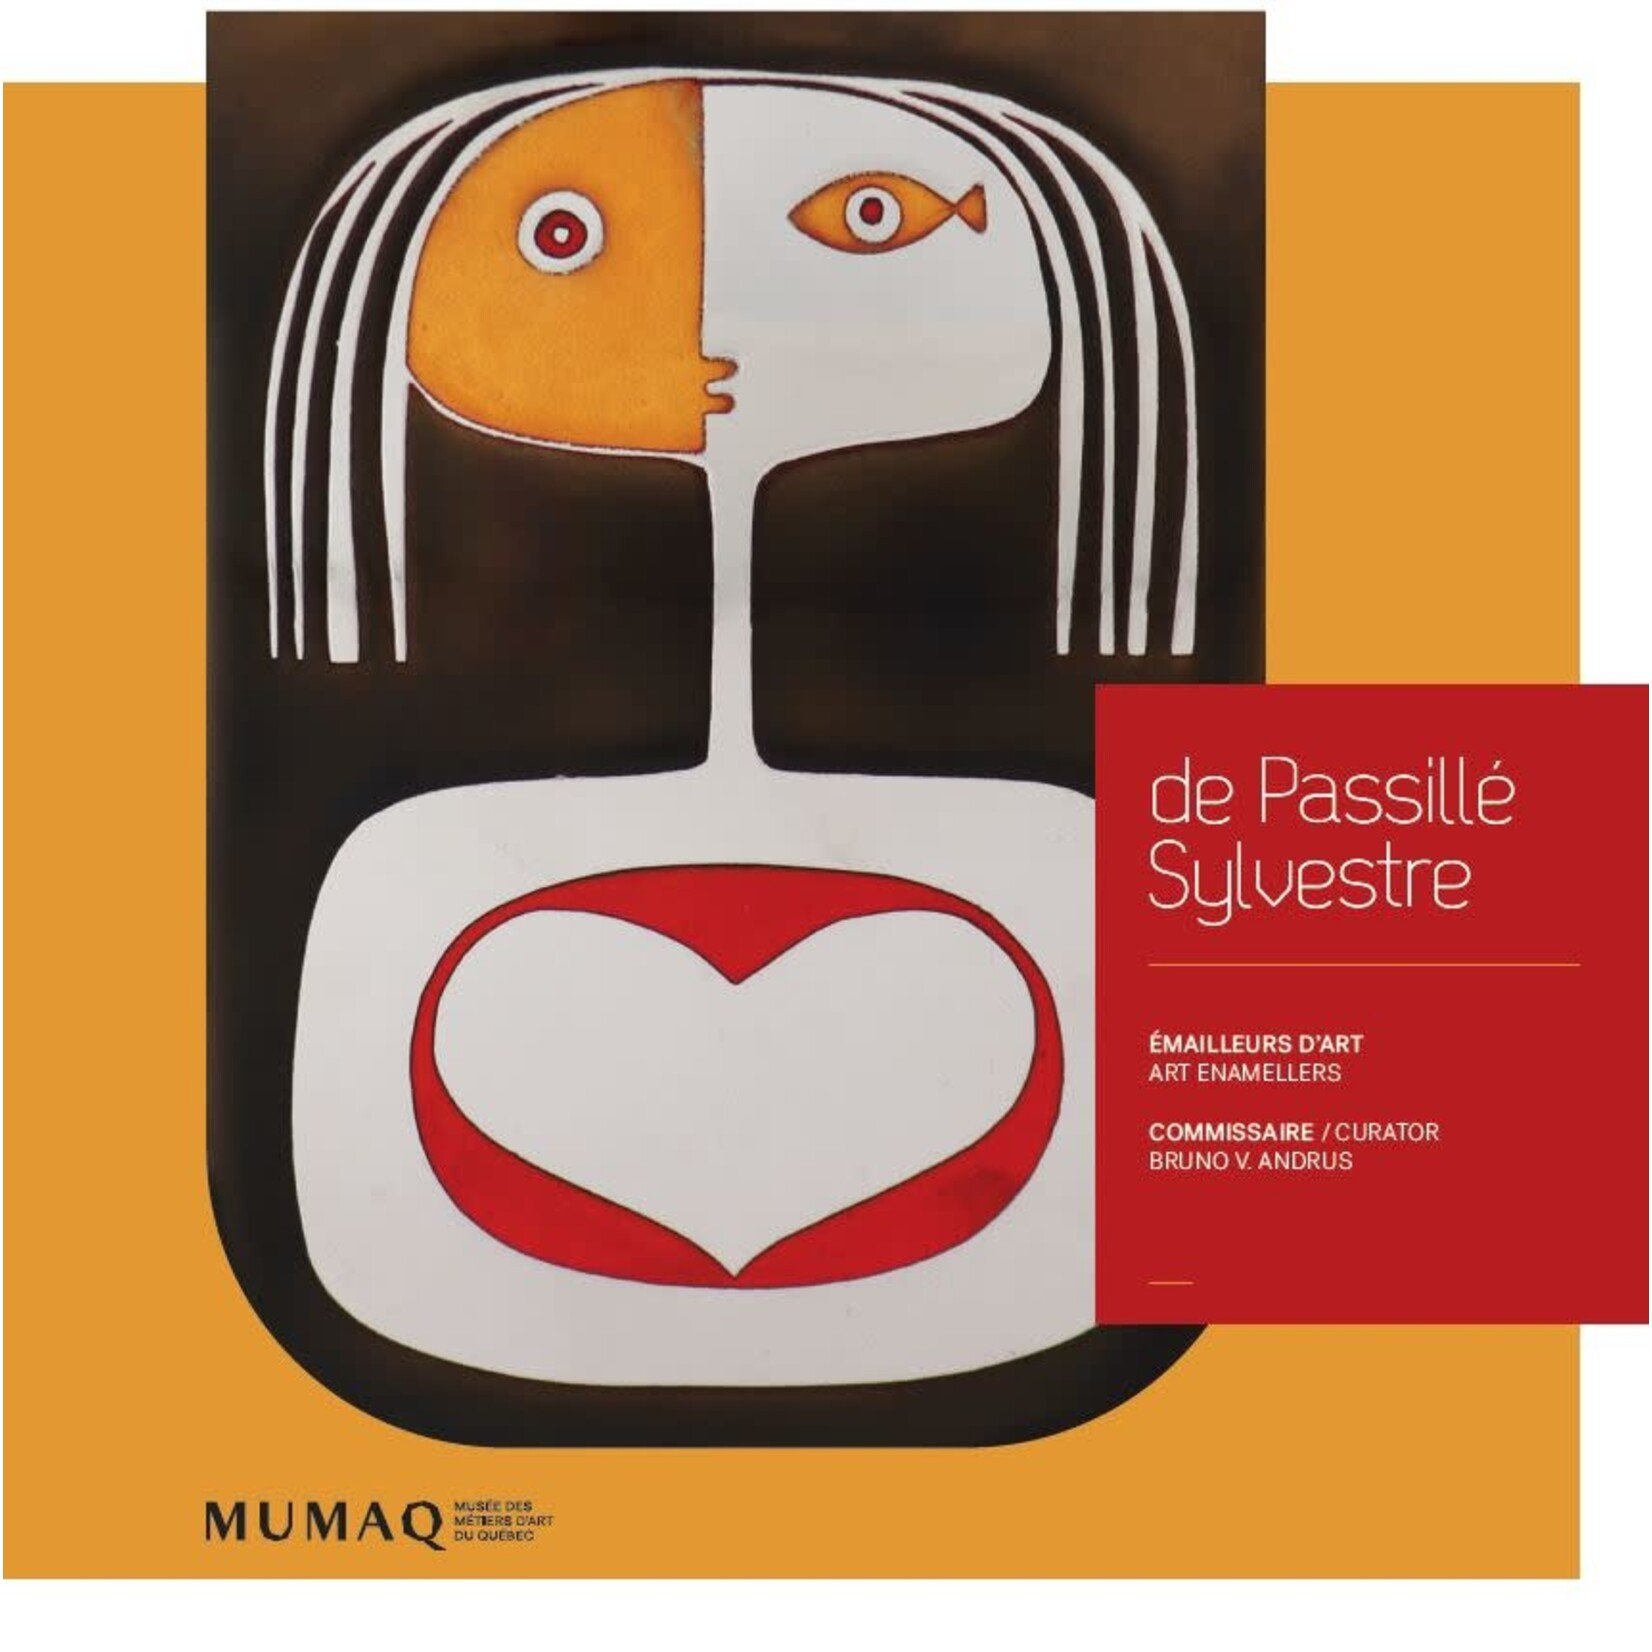 MUMAQ Catalogue de Passillé Sylvestre - Émailleurs d'art